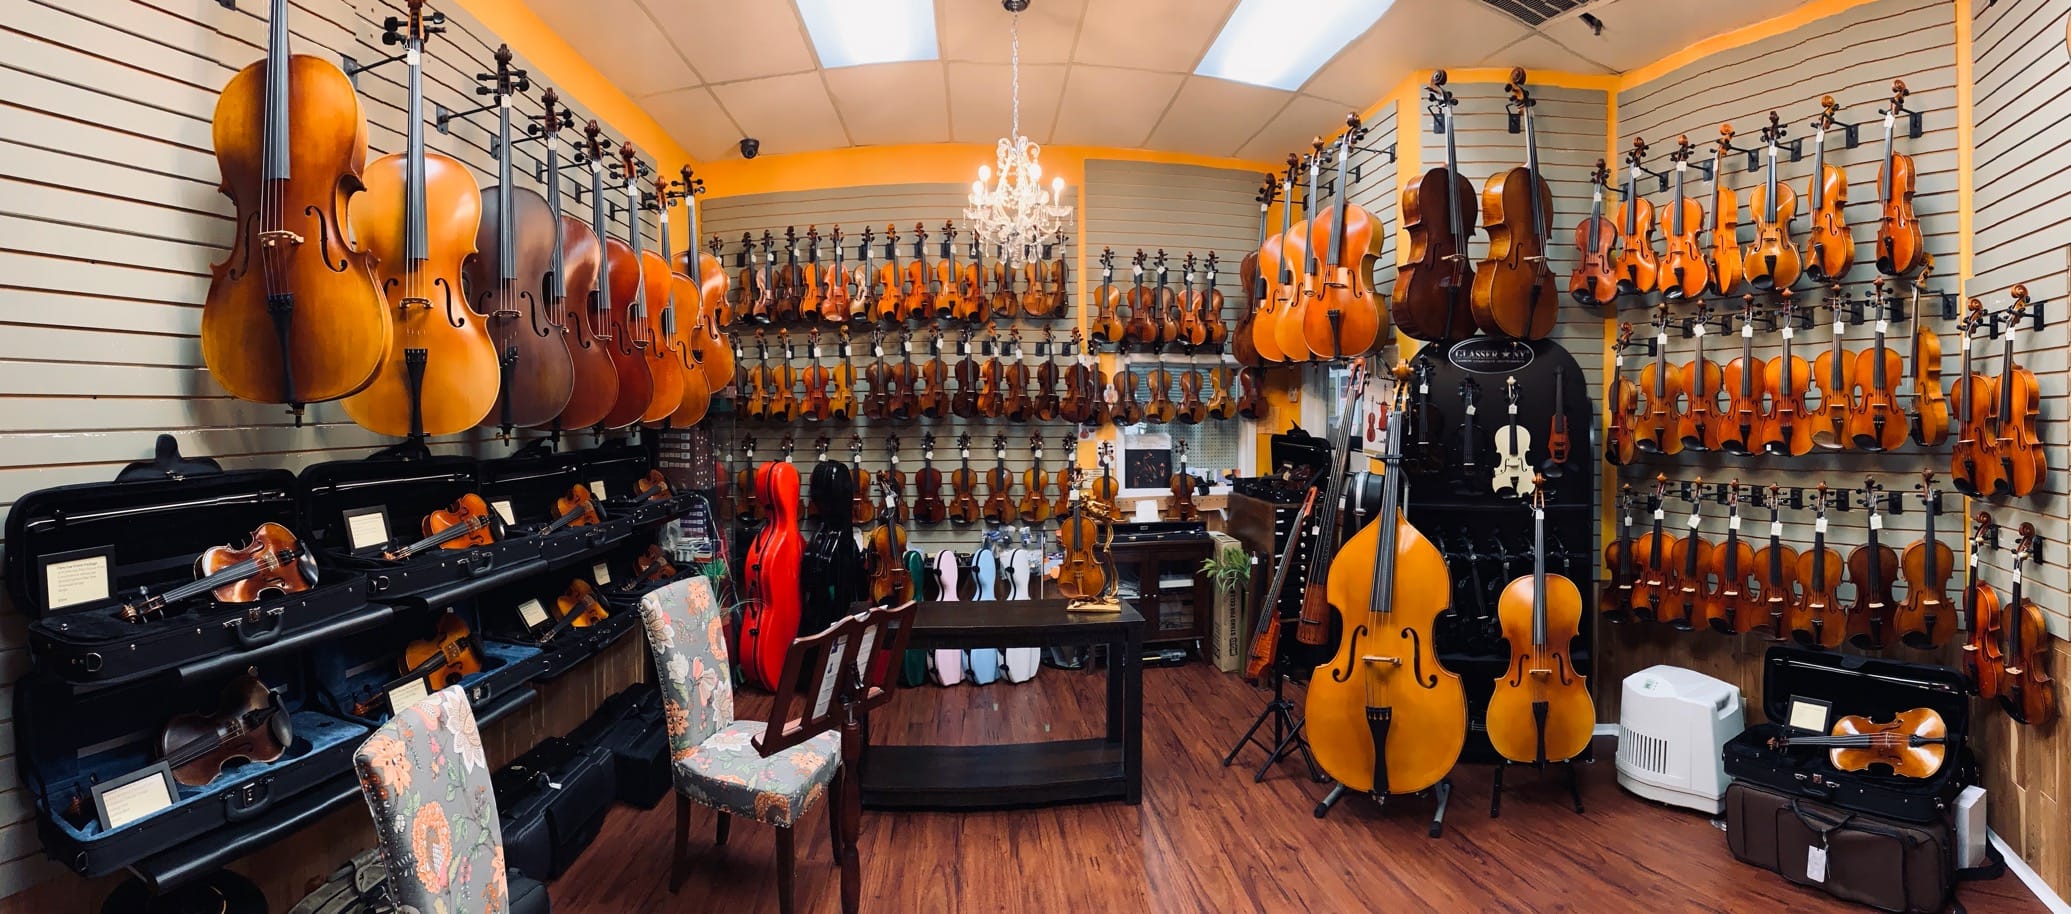 bob murphy's violin shop